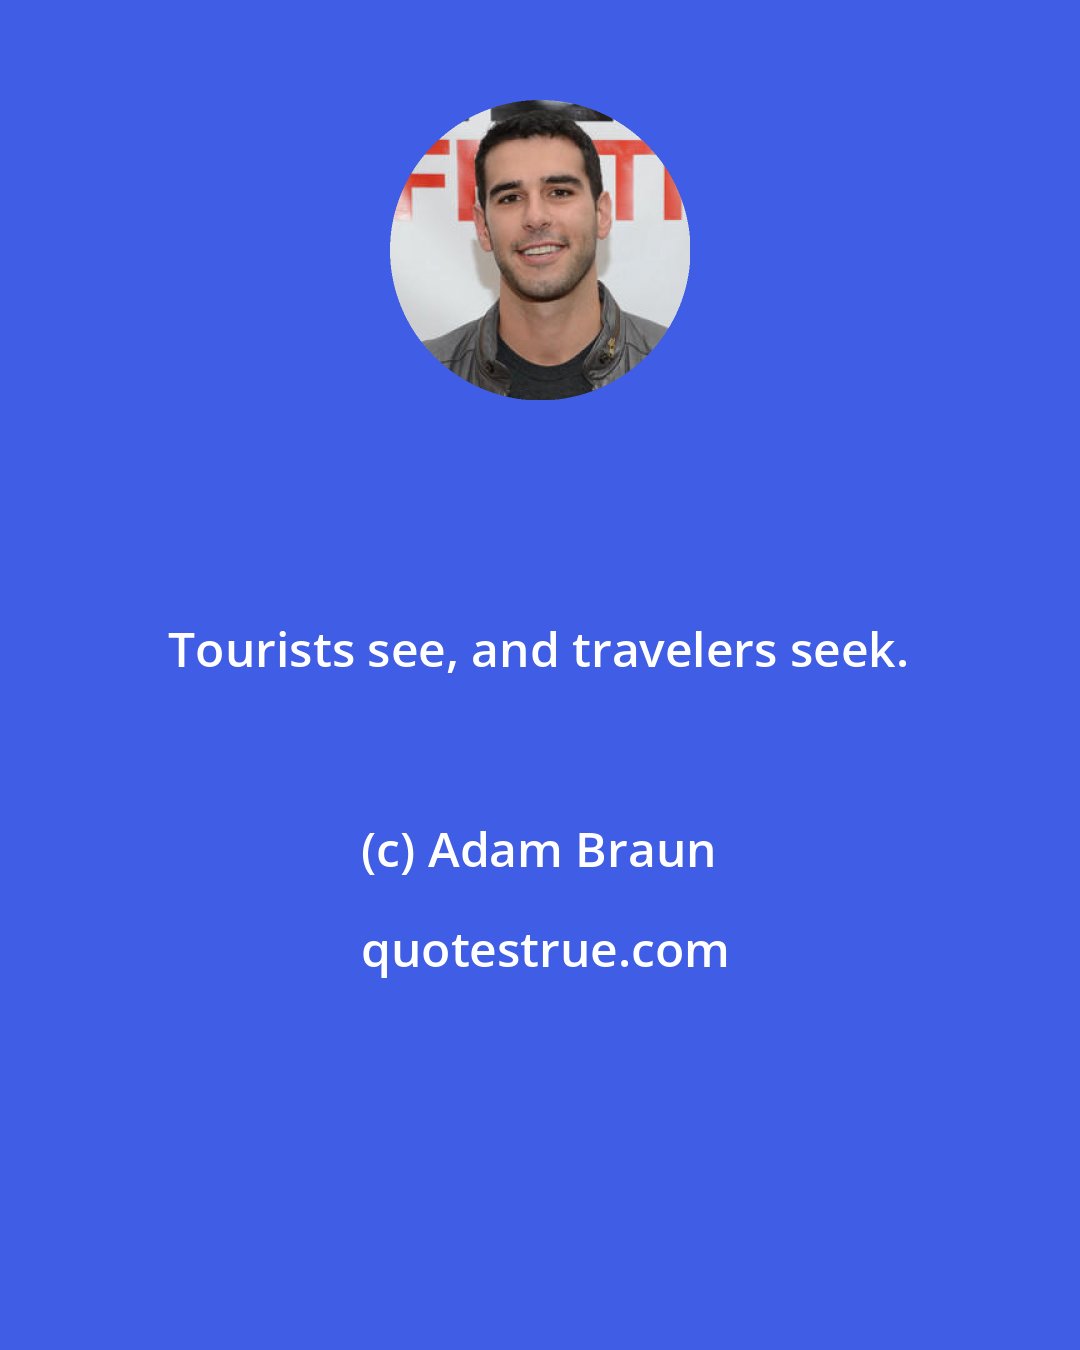 Adam Braun: Tourists see, and travelers seek.